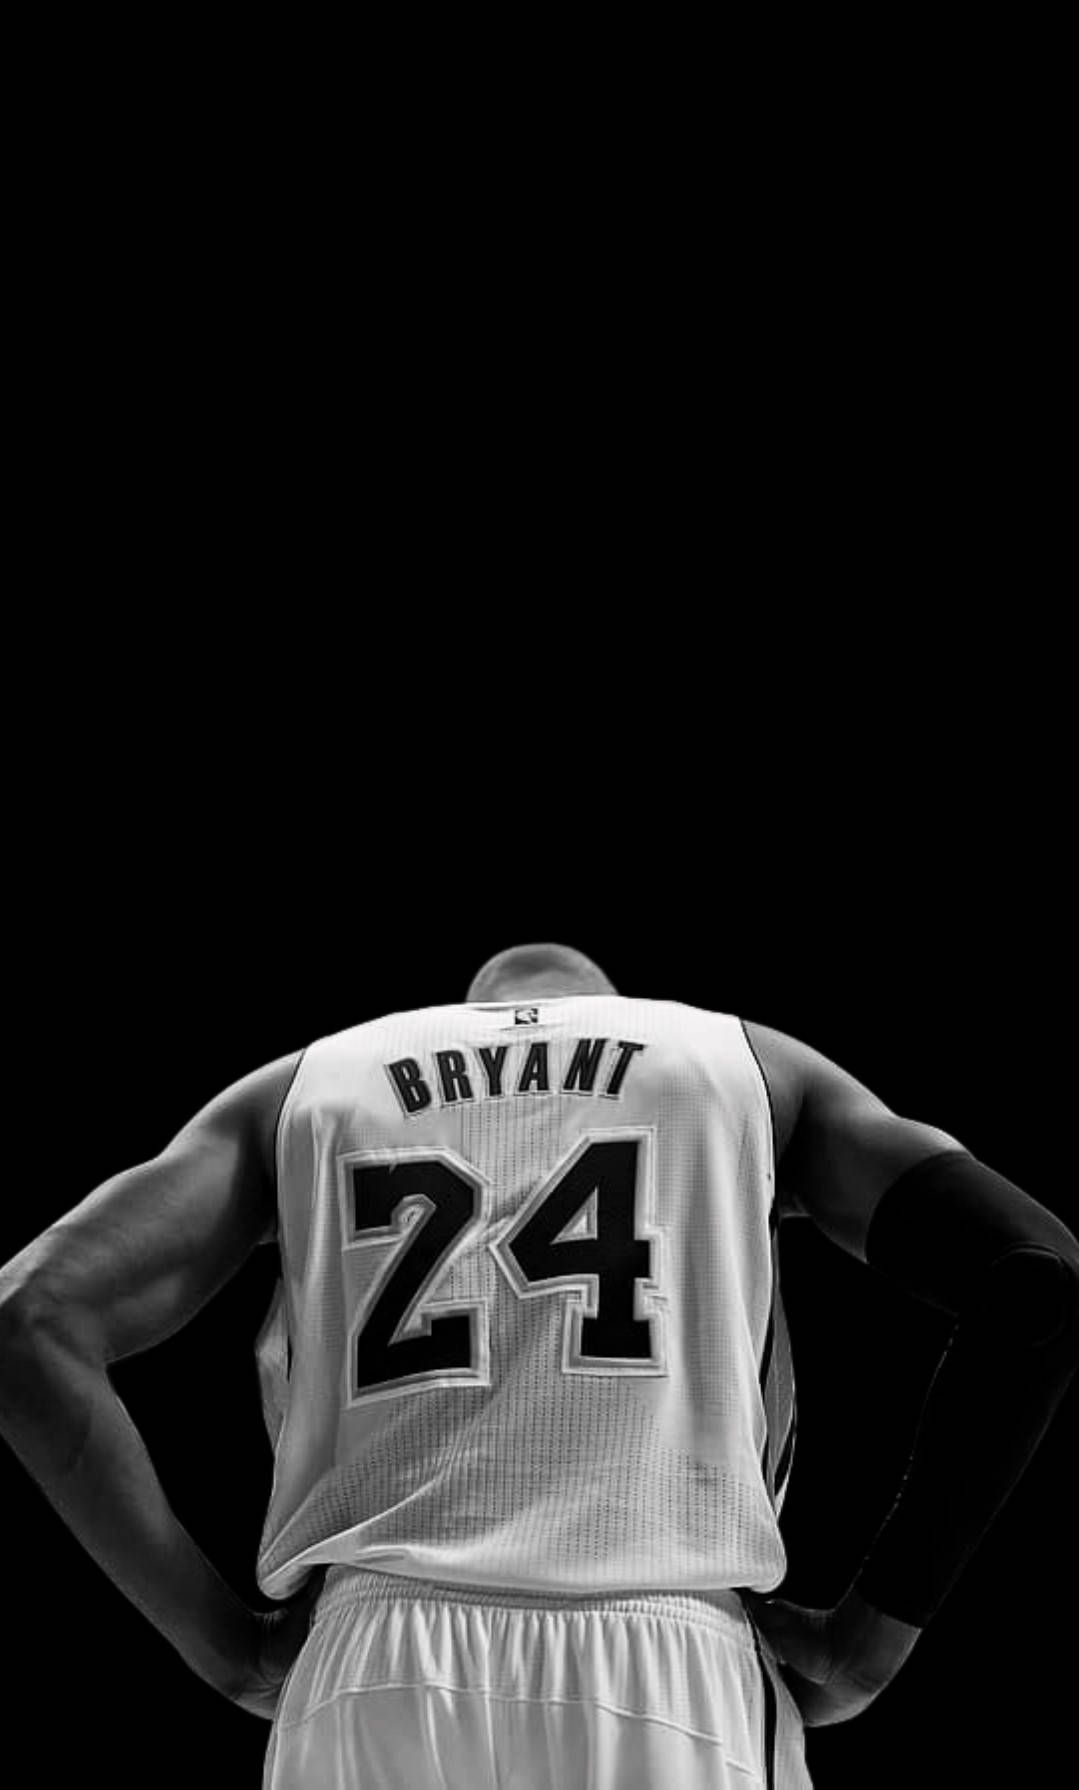  Kobe Bryant Hintergrundbild 1079x1790. Download Aesthetic Kobe Bryant Jersey Taken From Behind Wallpaper